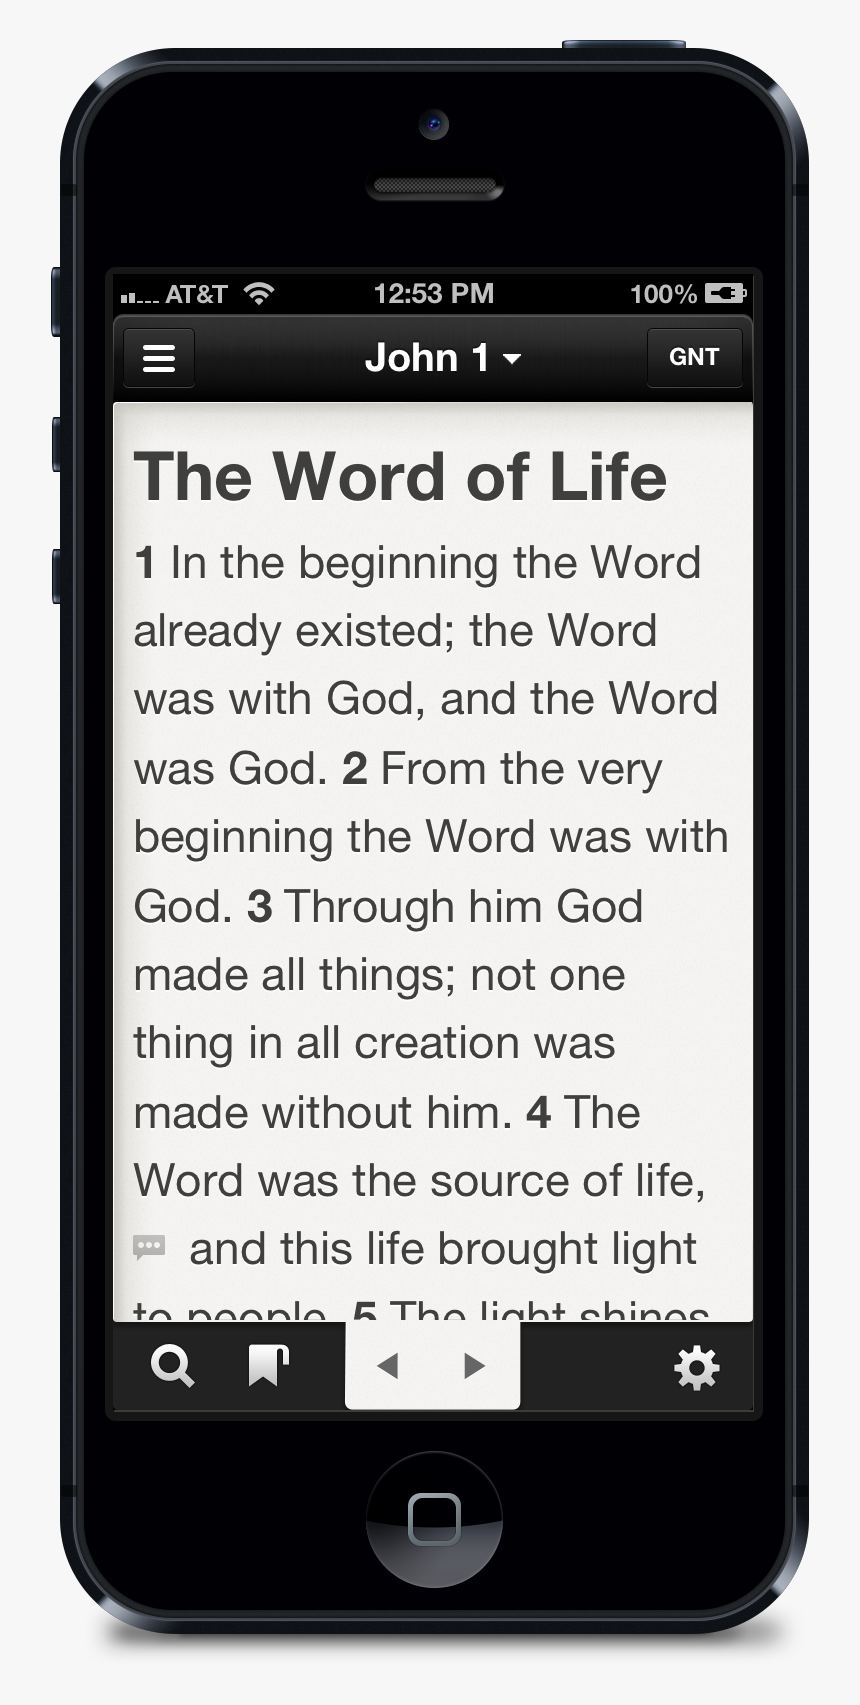 Iphone-bible - Bible App On Phone